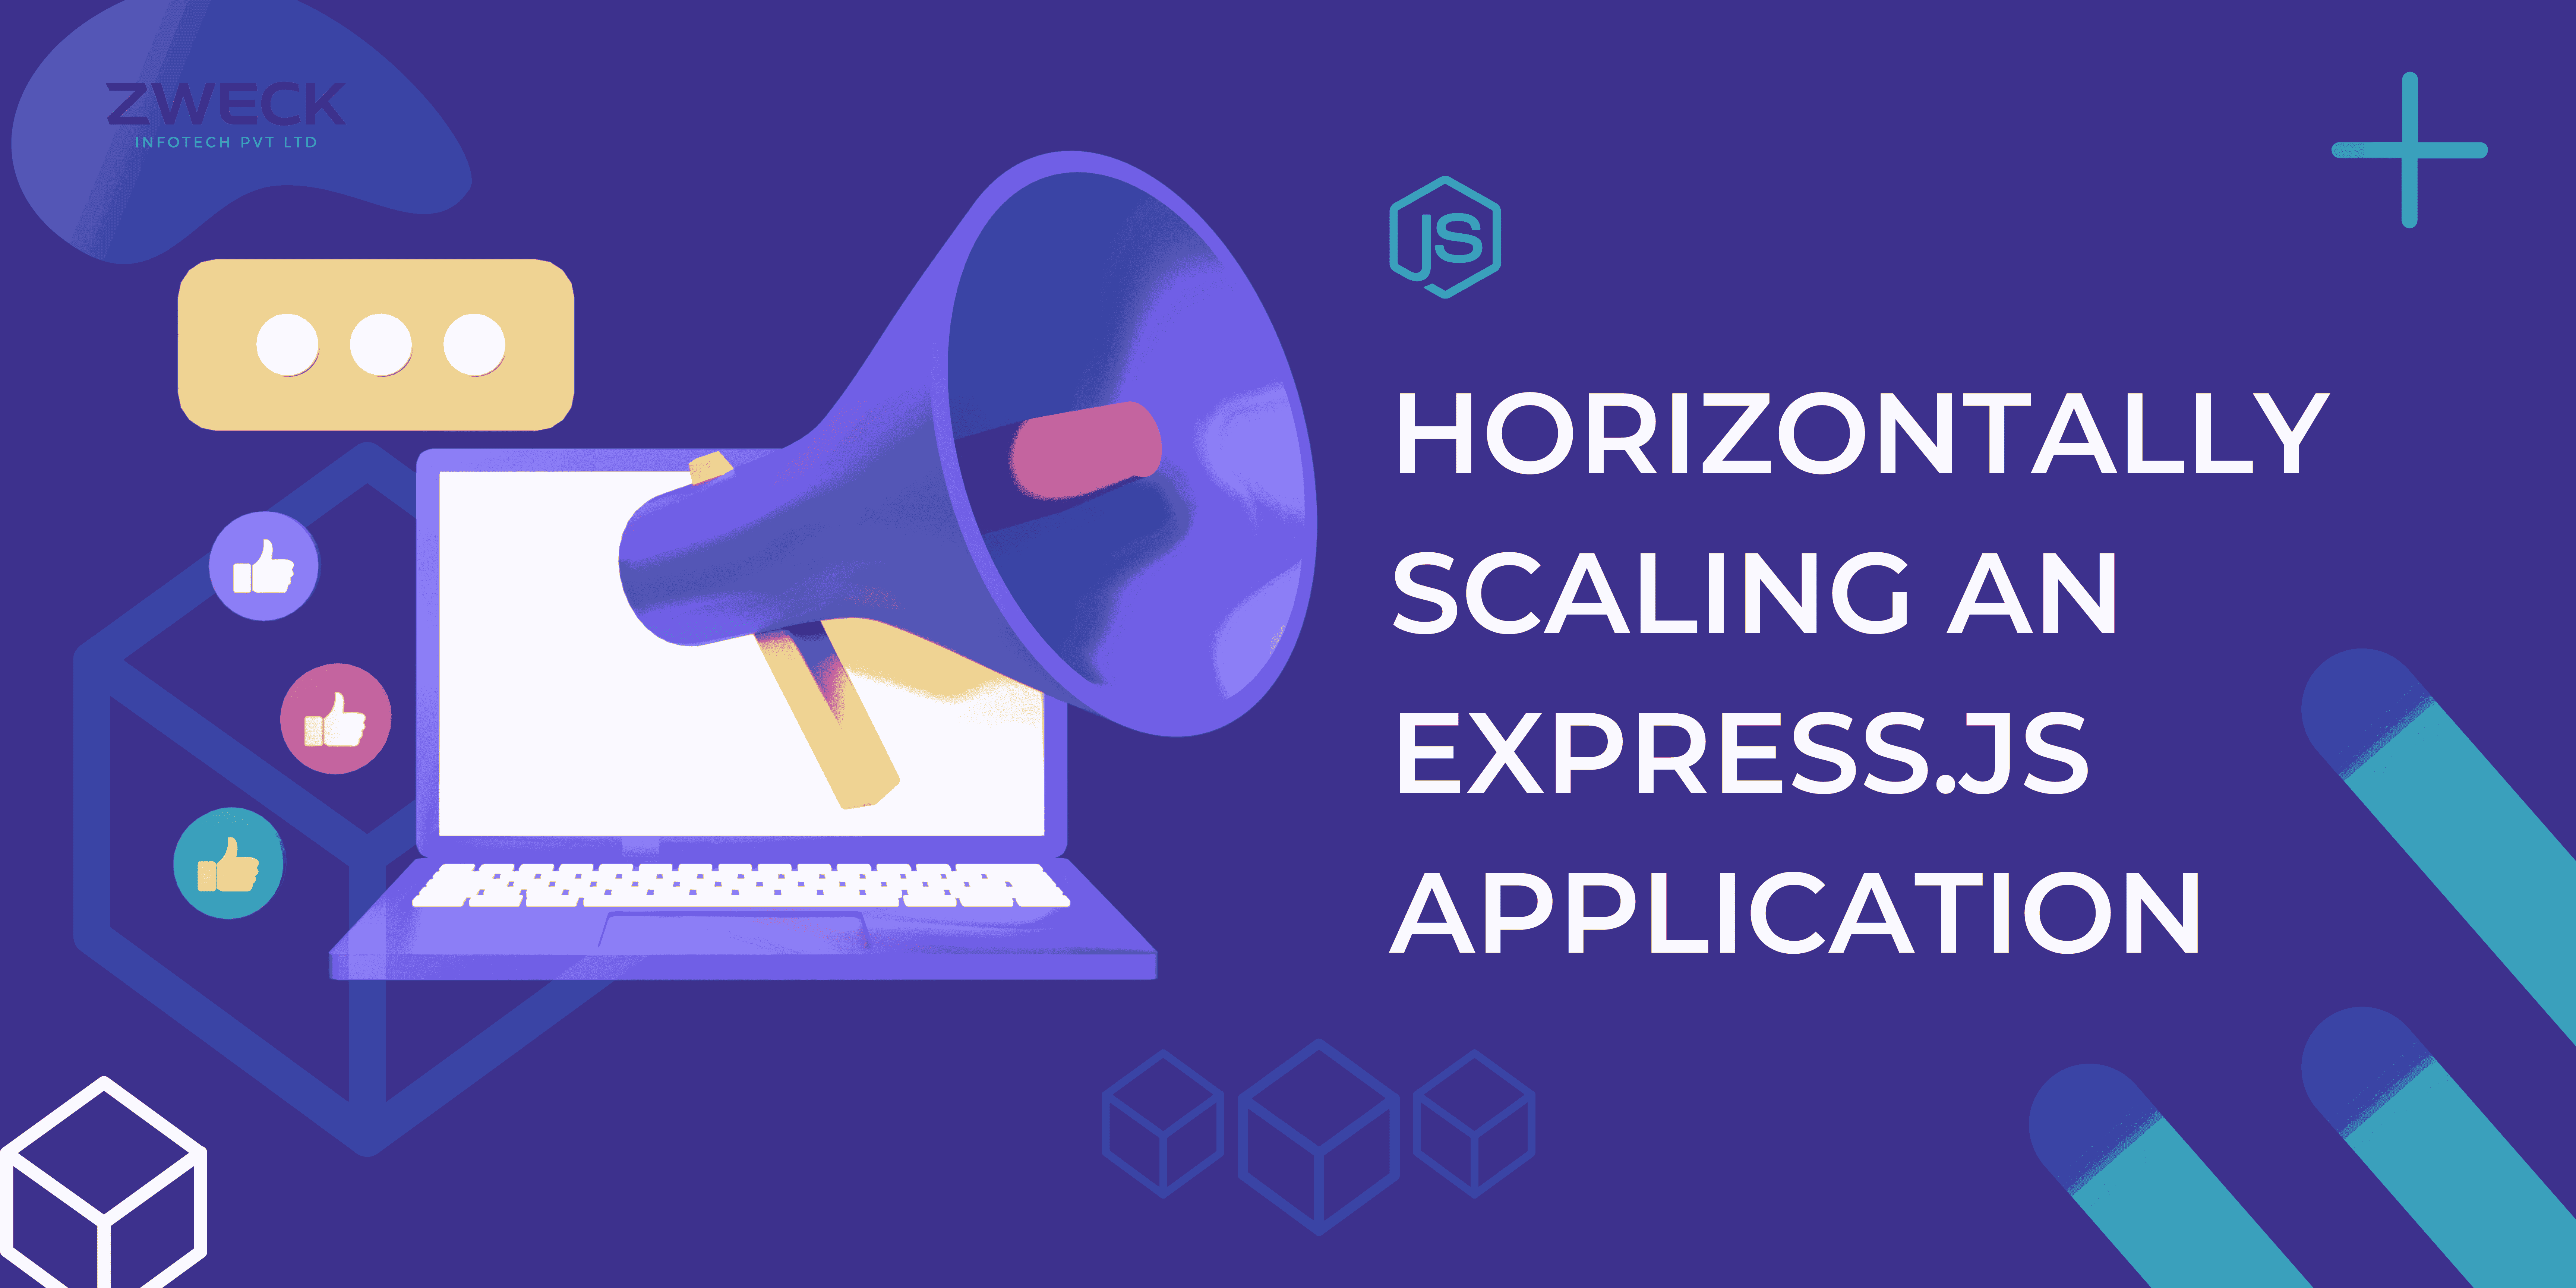 Horizontally Scaling an Express.js Application